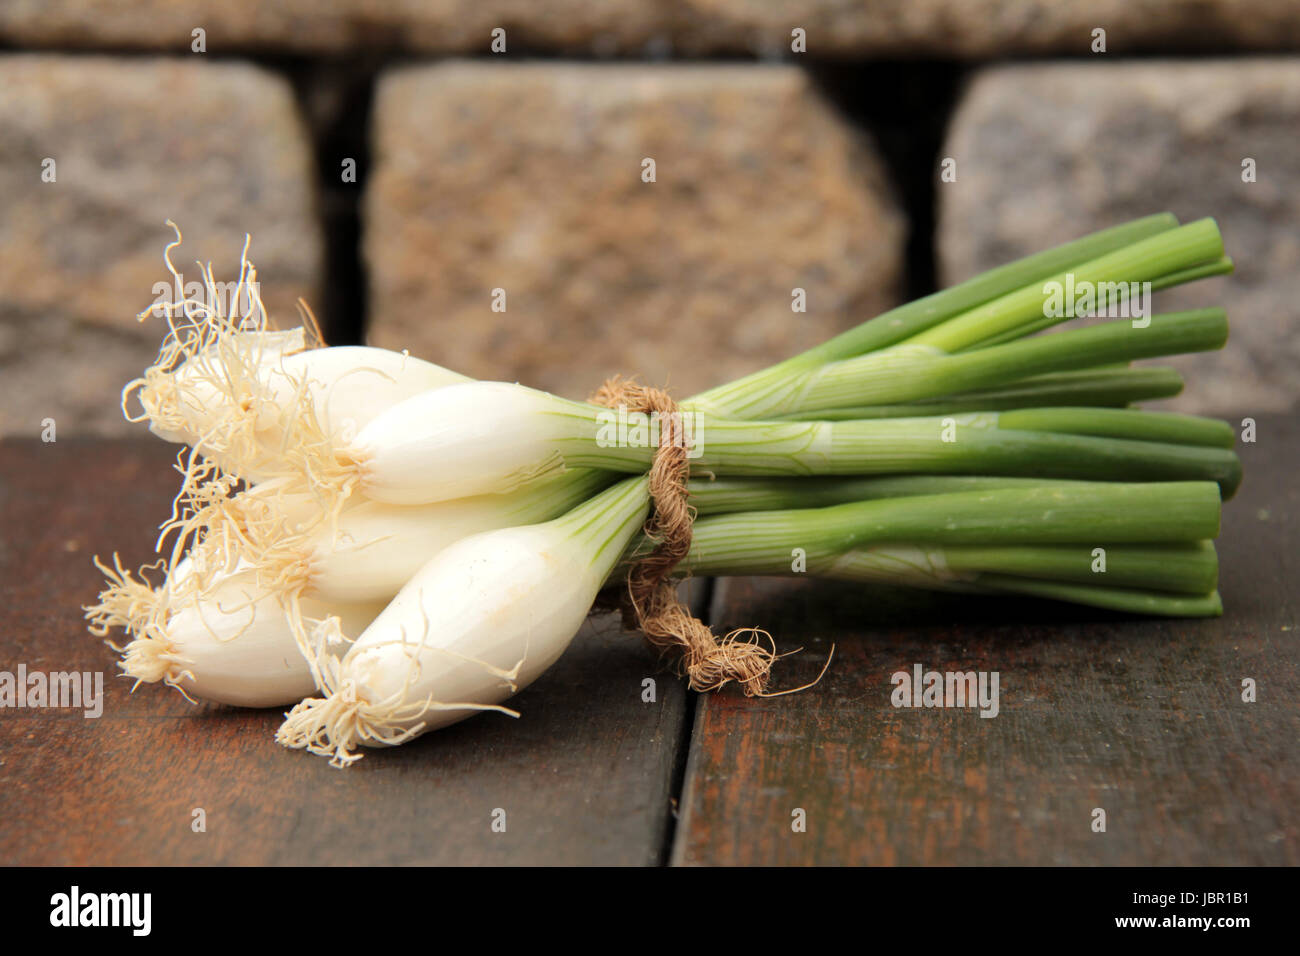 winter onion Stock Photo